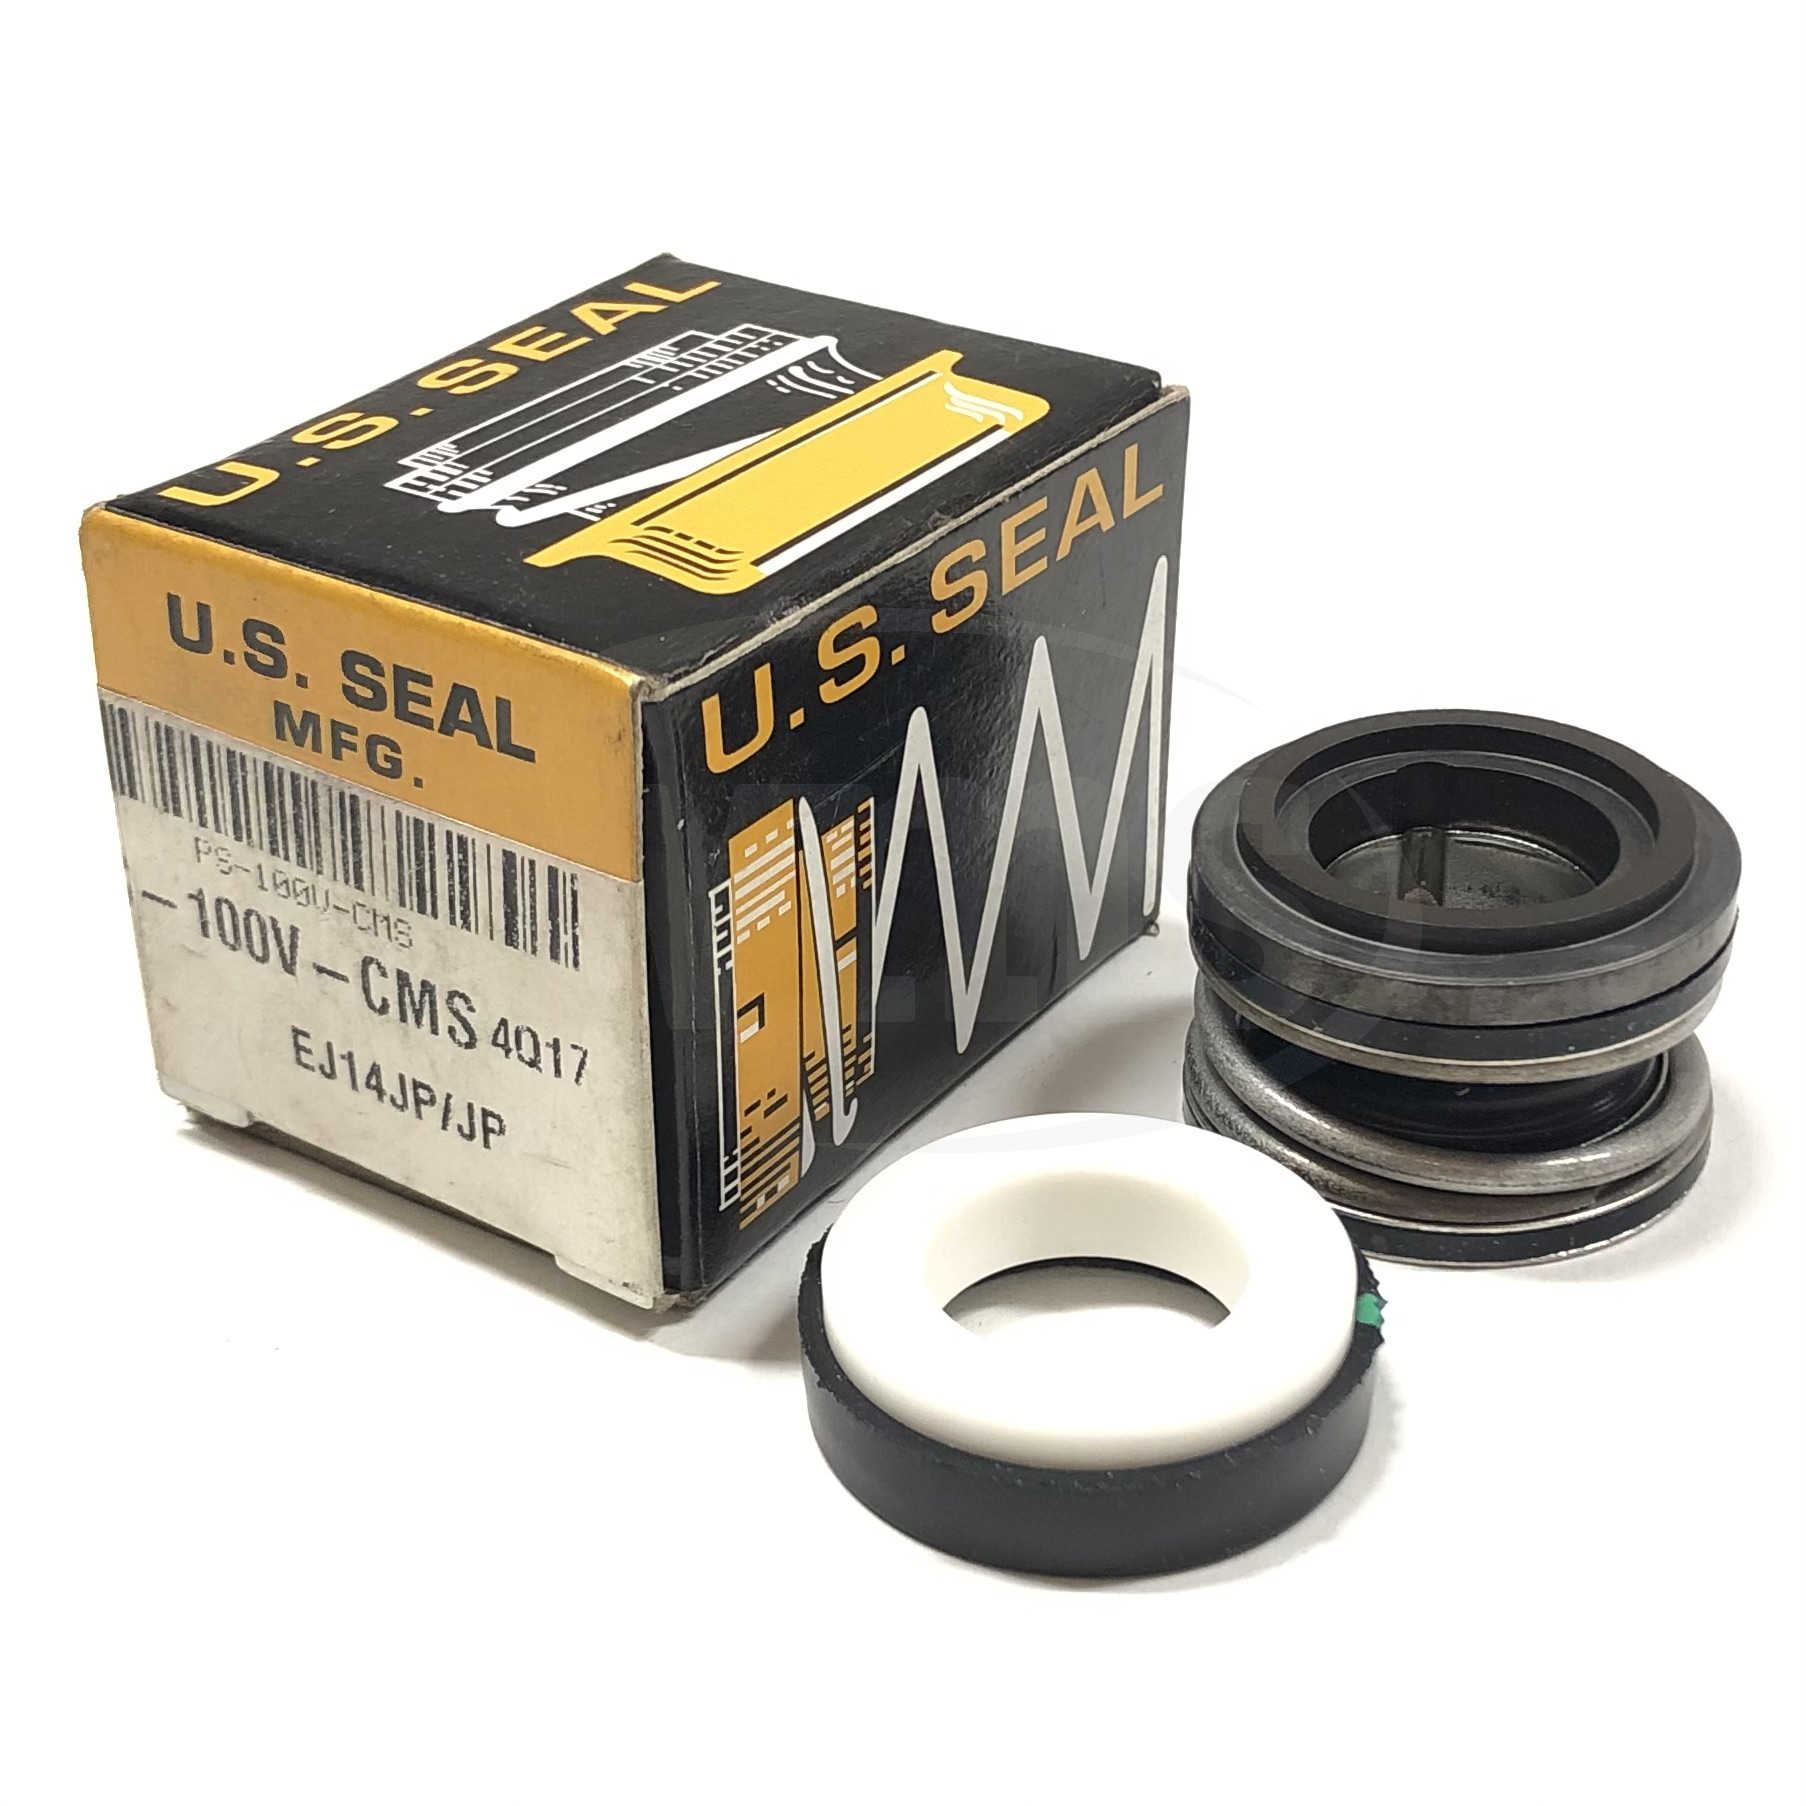 PS-100V-CMS U.S. Seal MFG. Pump Seal 1